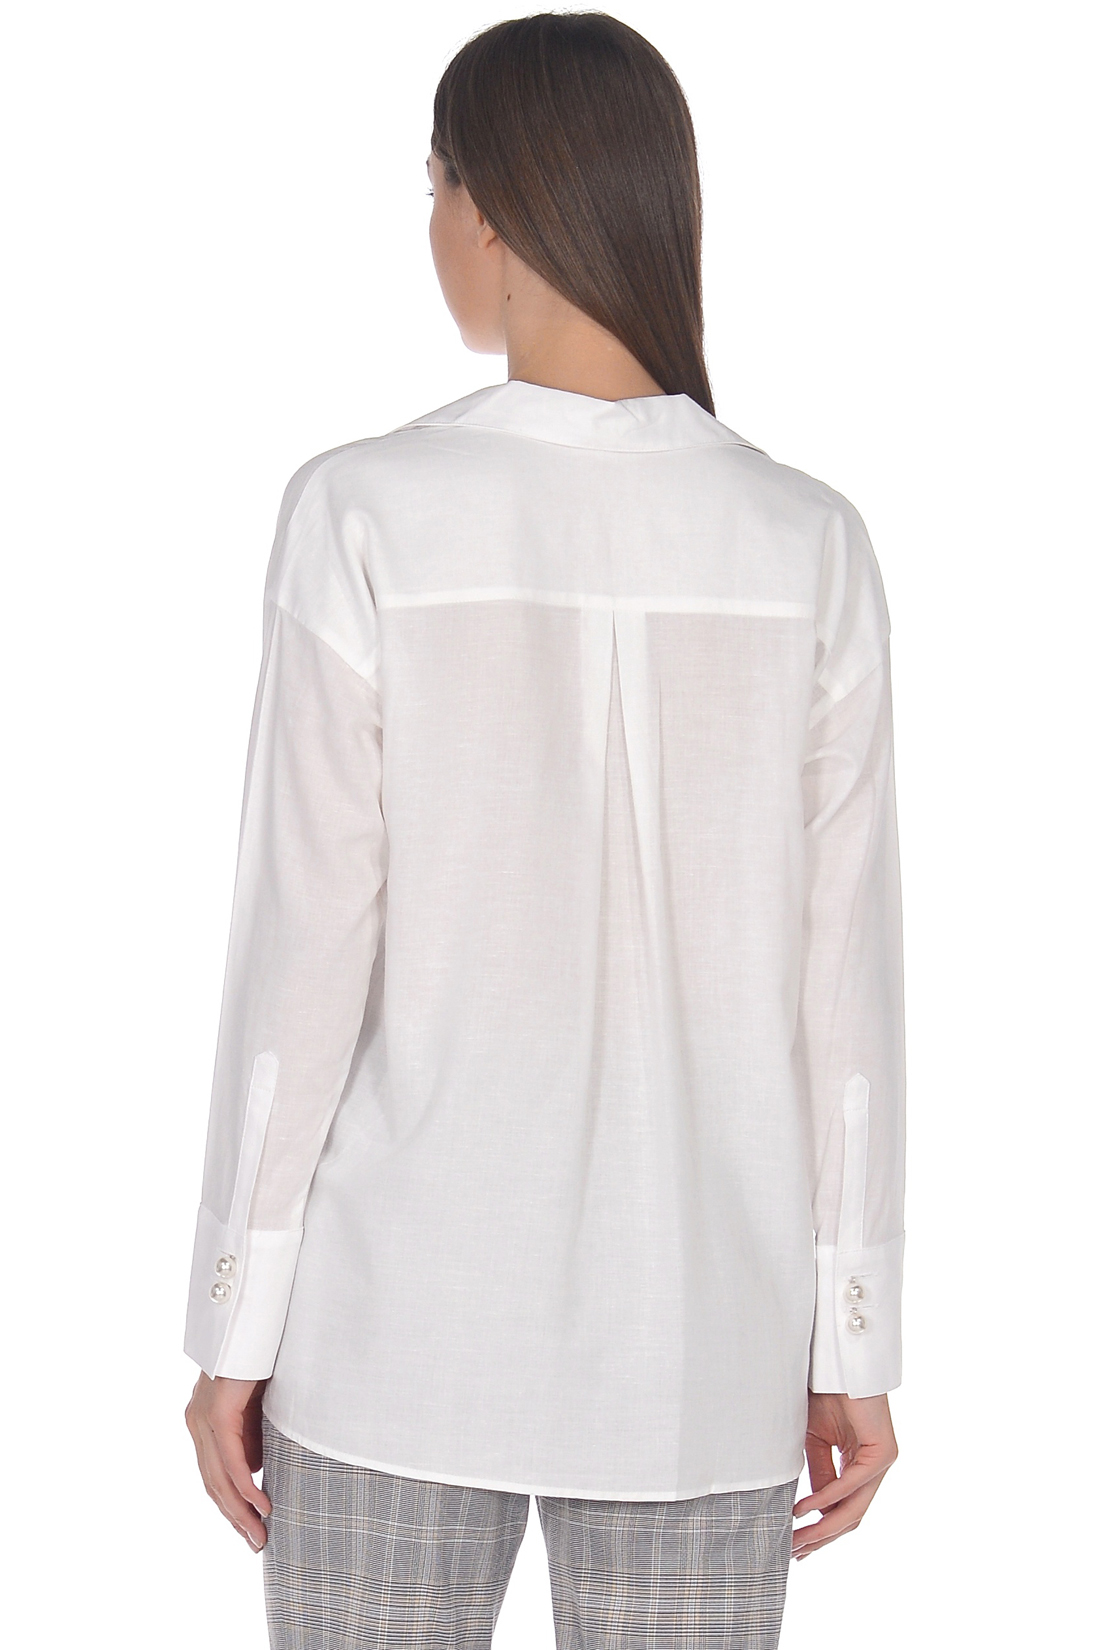 Белая блузка с жемчугом (арт. baon B179043), размер XS, цвет белый Белая блузка с жемчугом (арт. baon B179043) - фото 2